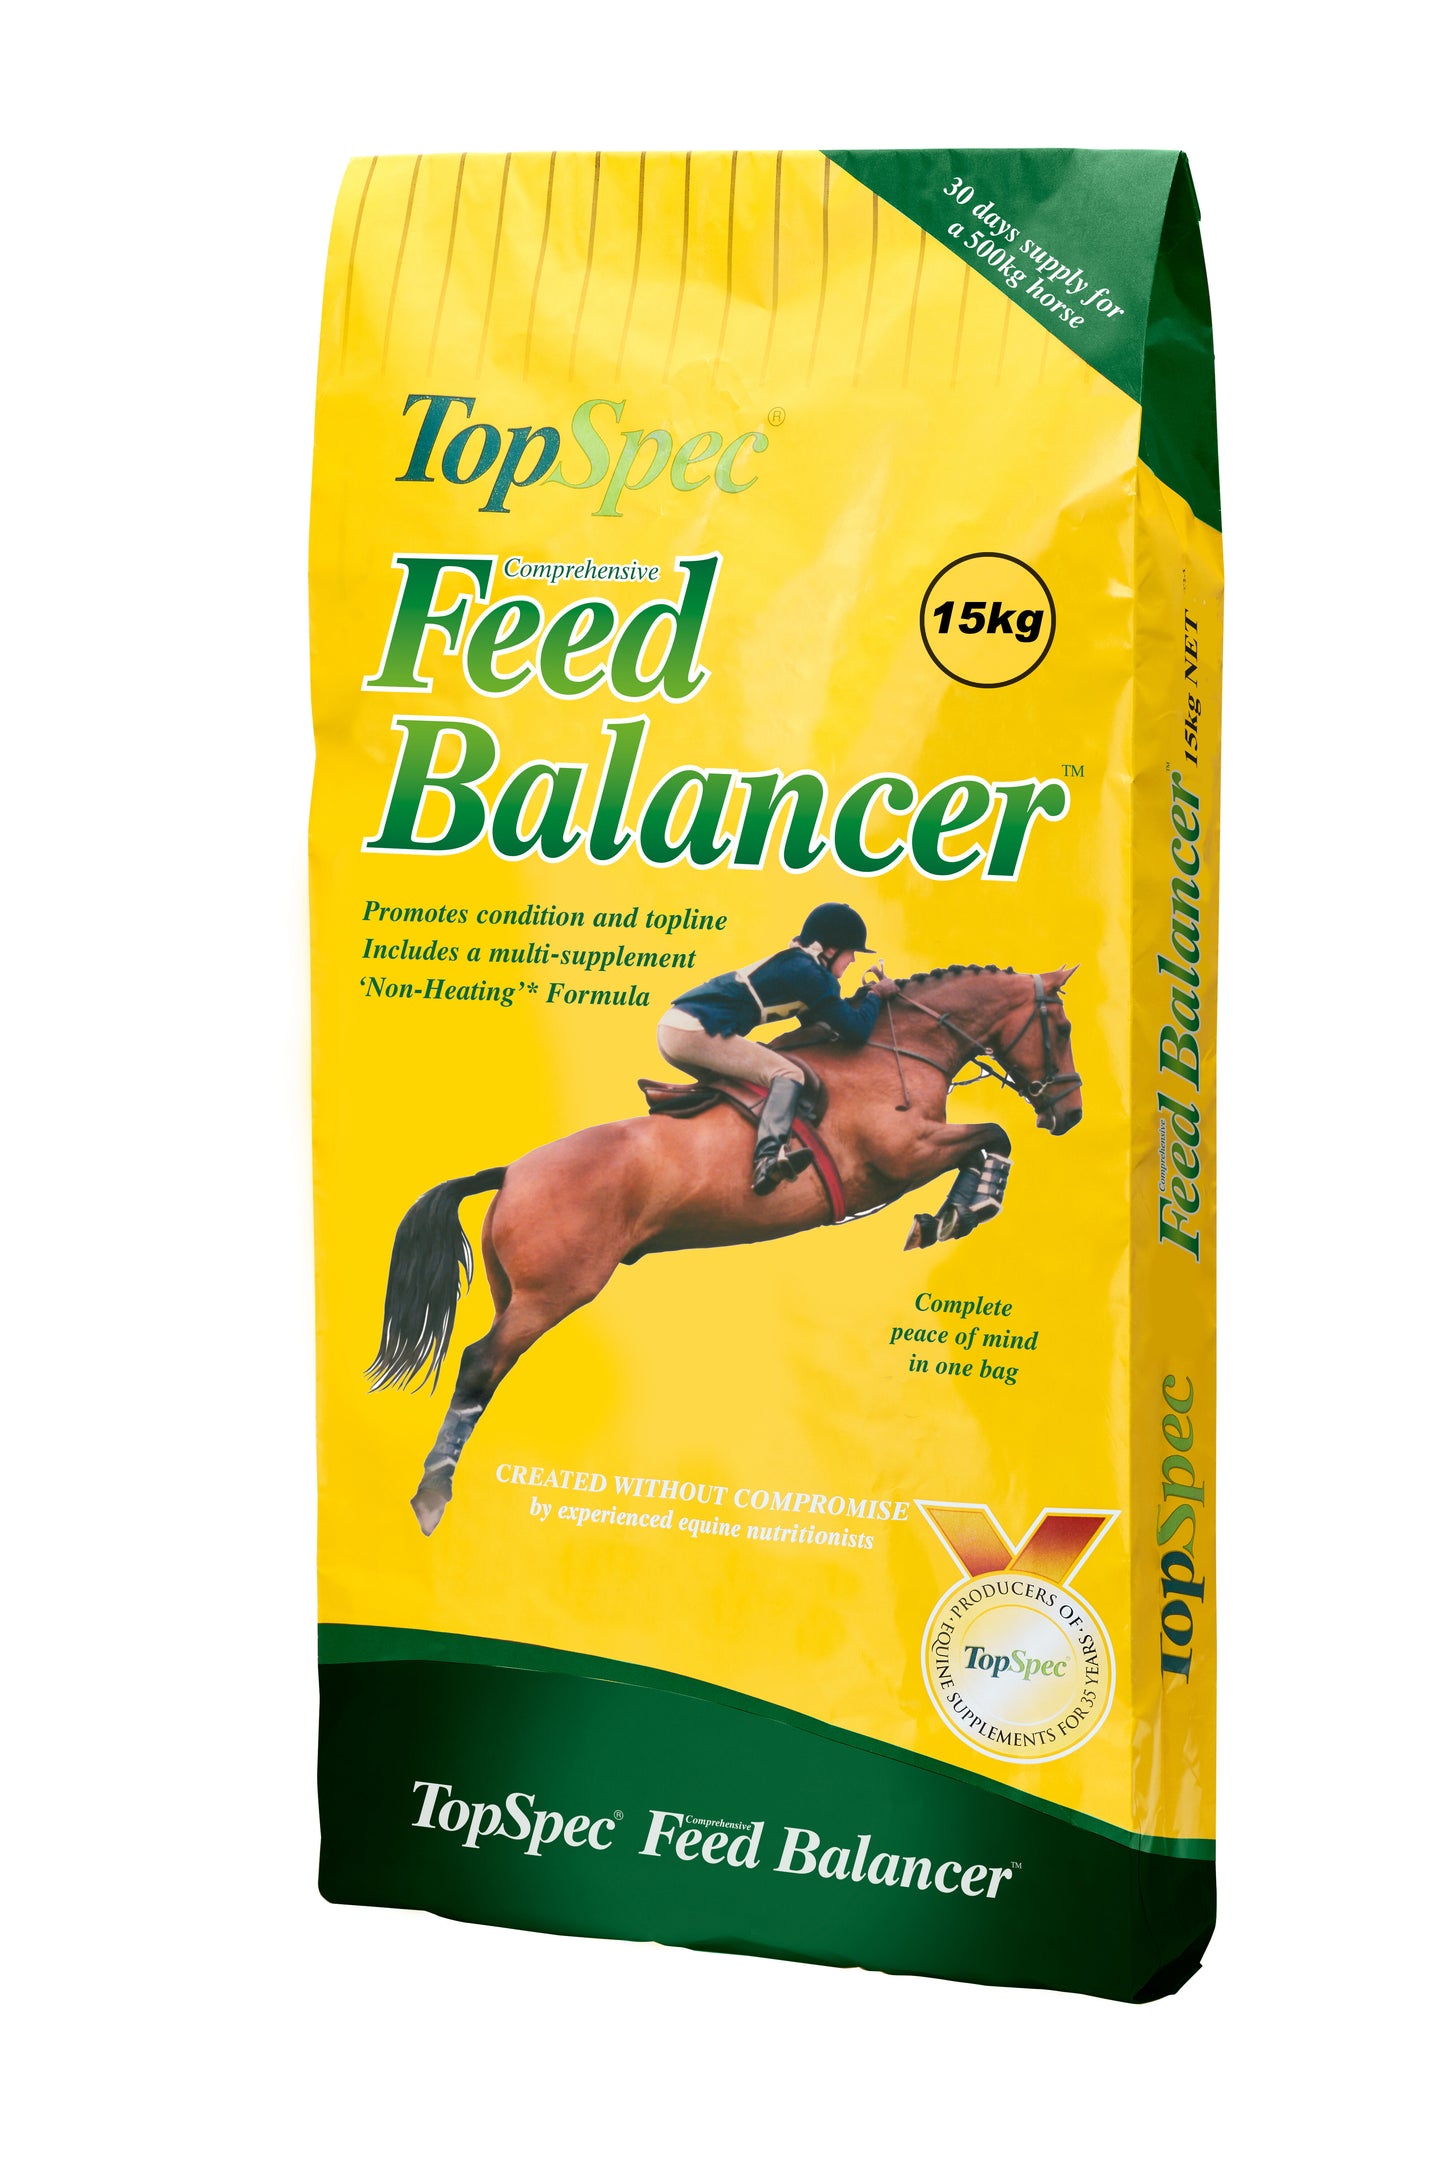 TopSpec Comprehensive Feed Balancer